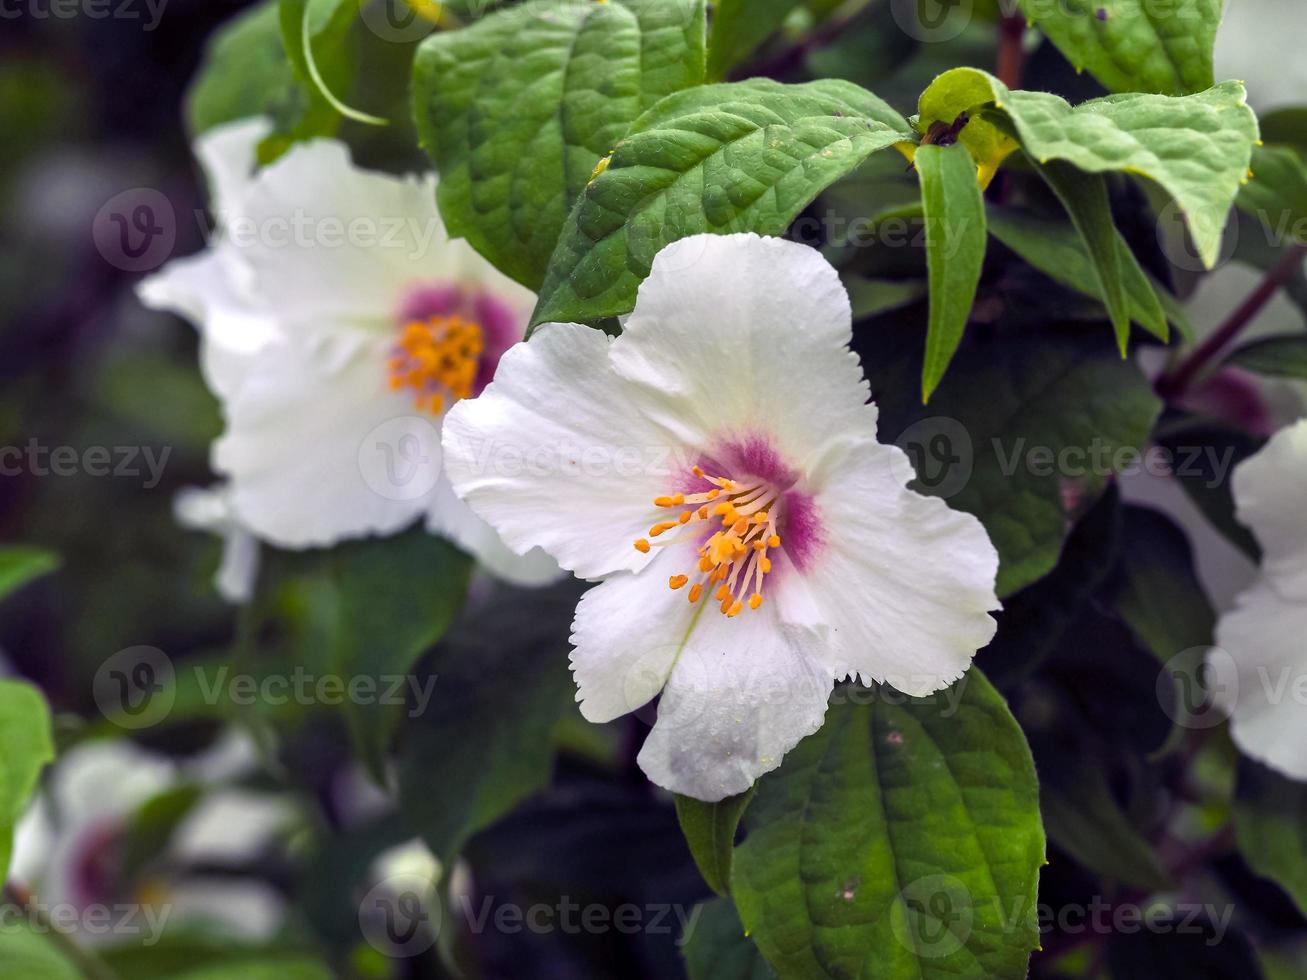 närbild av vita blommor på en mock orange buske foto